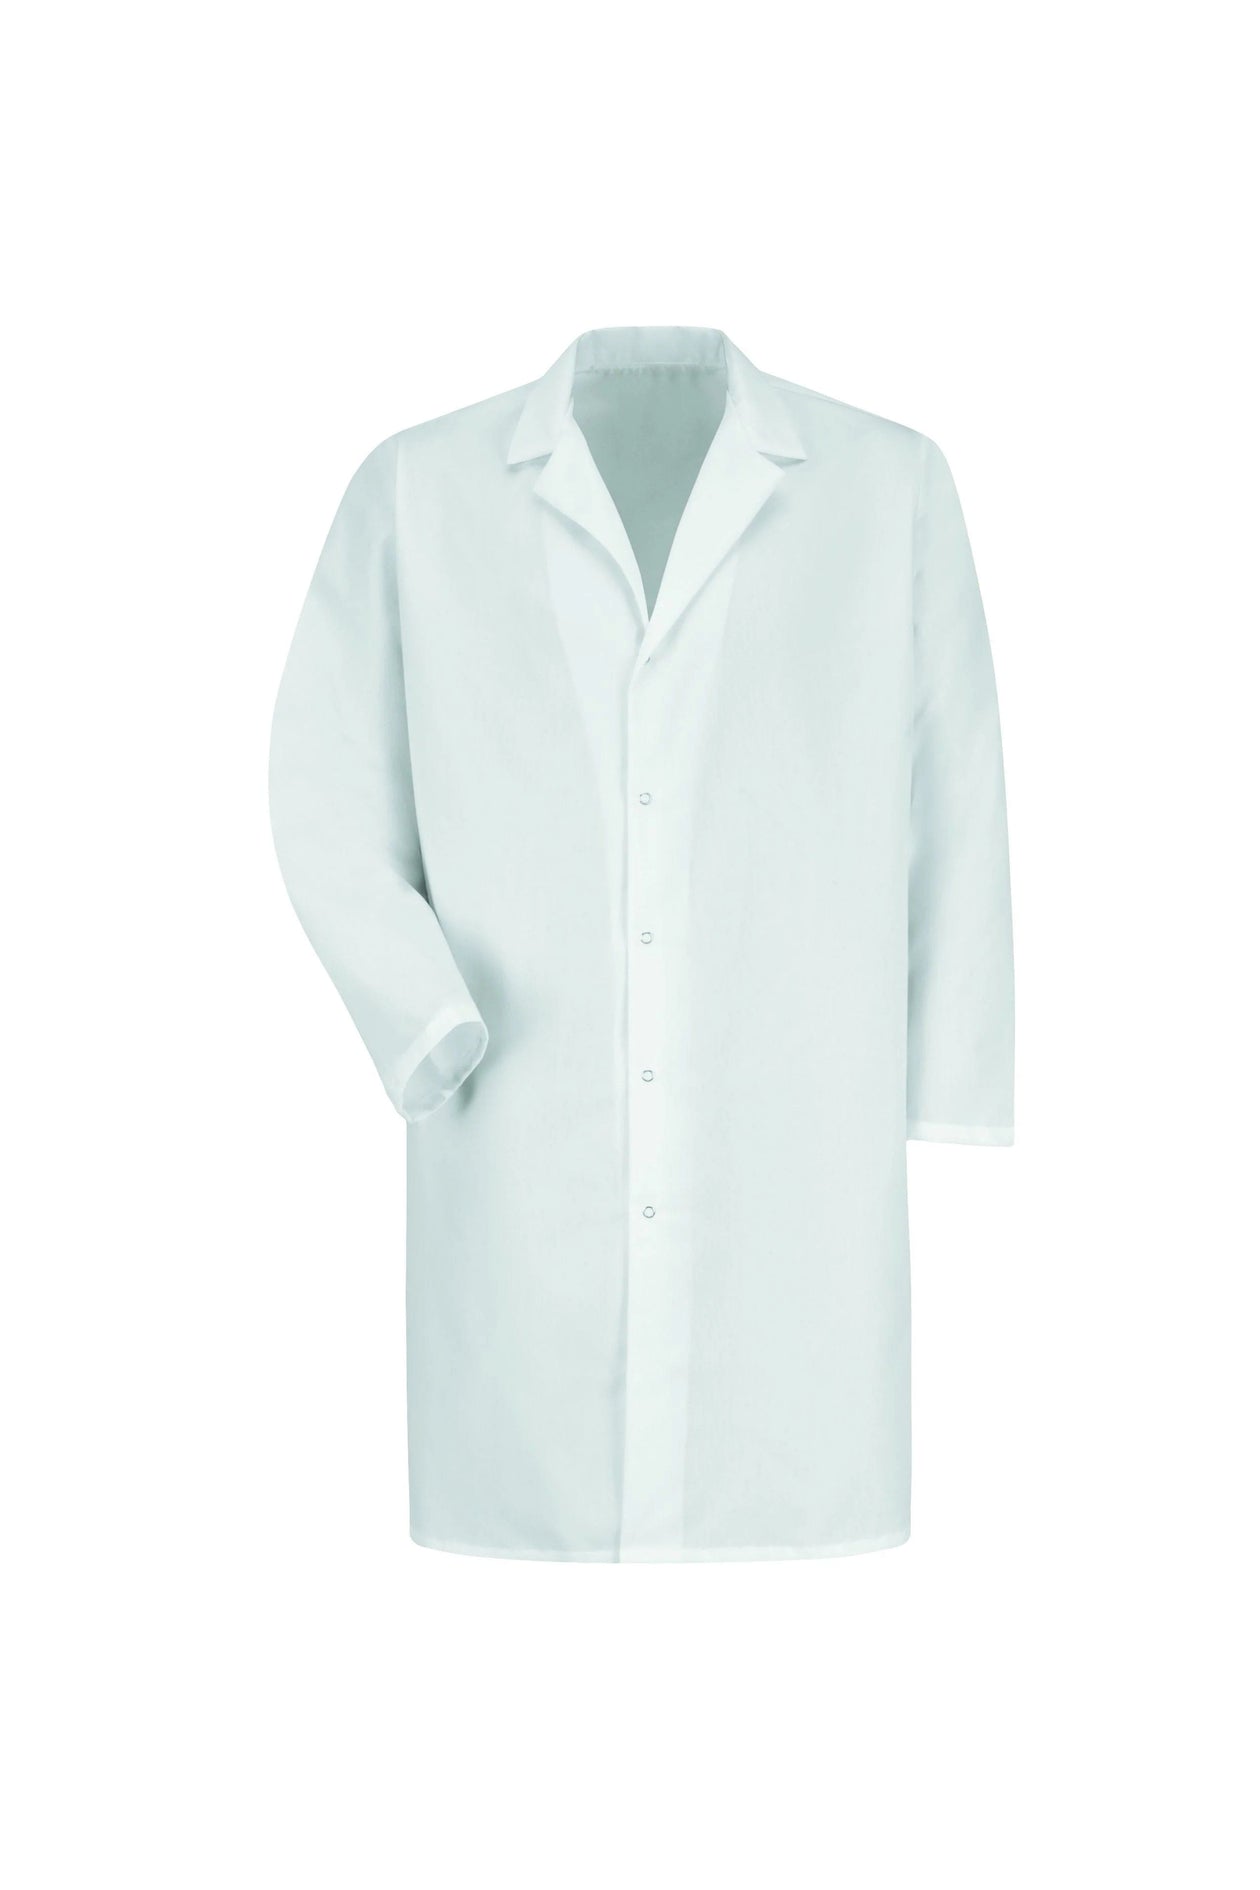 Red Kap Men's White Specialized Lab Coat